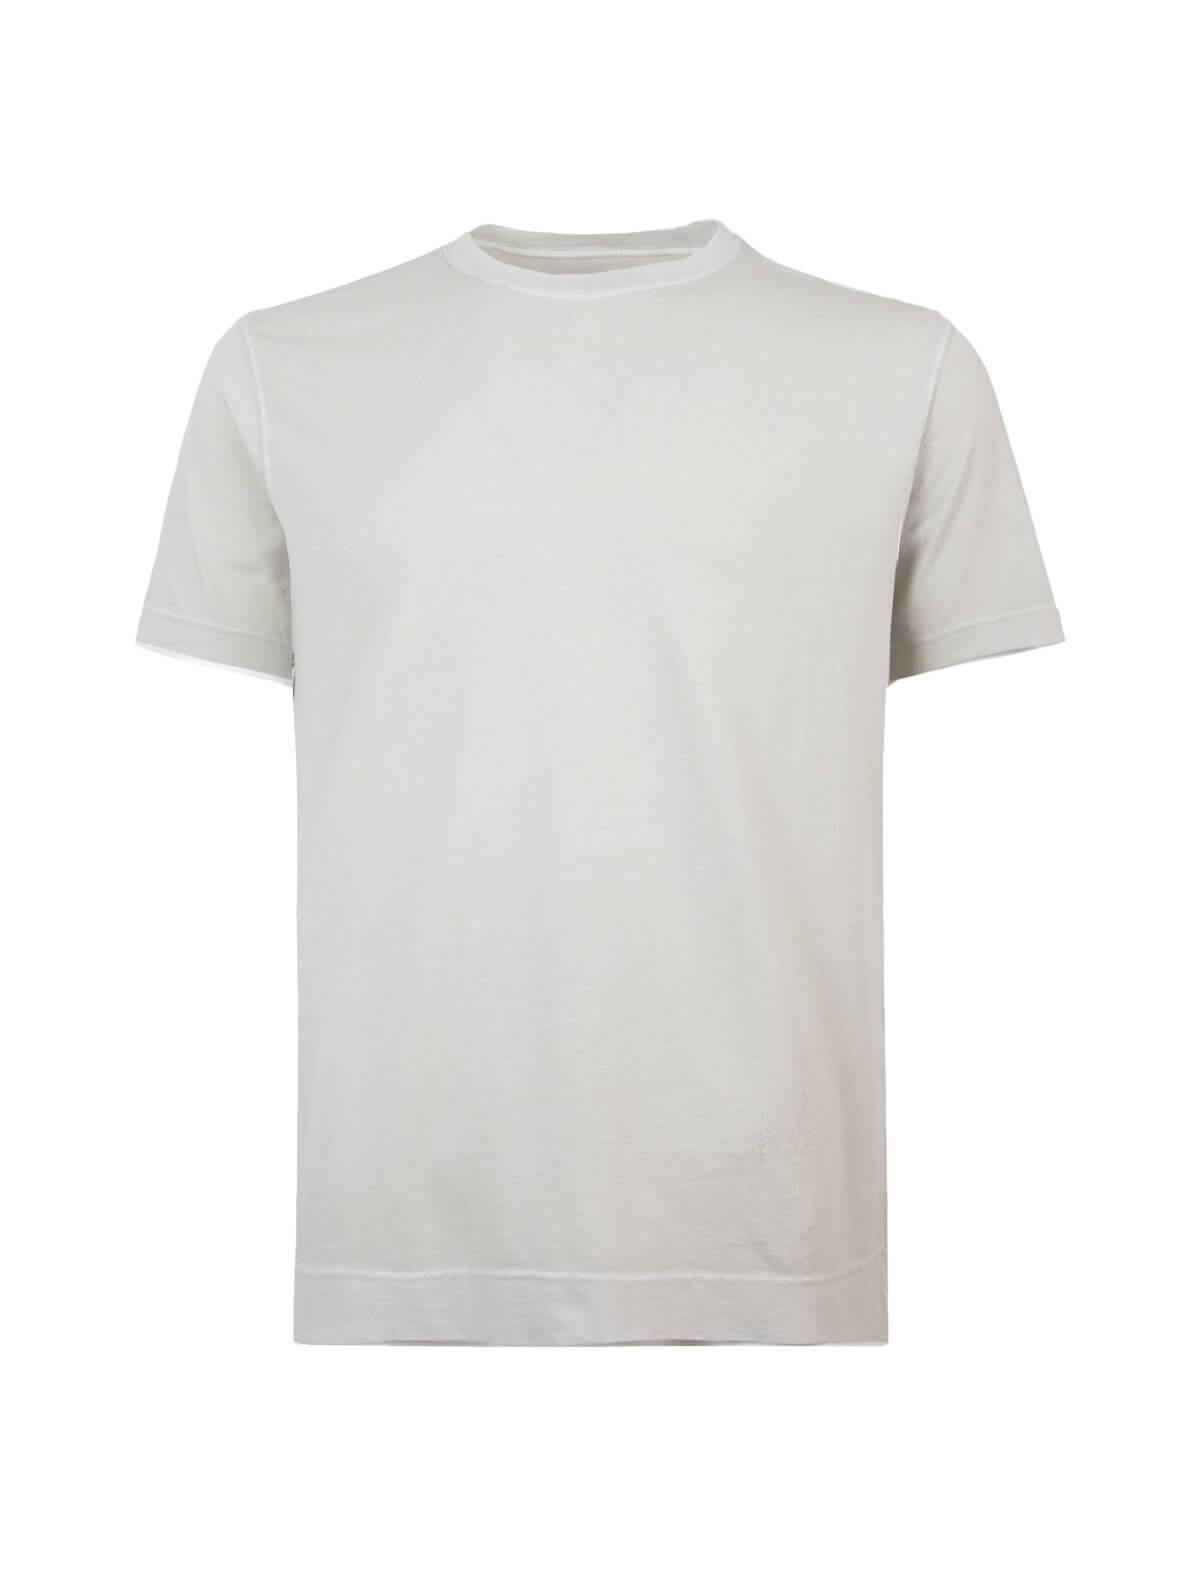 CIRCOLO 1901 Crew Neck Cotton T-Shirt in Pale Lilac | CLOSET Singapore